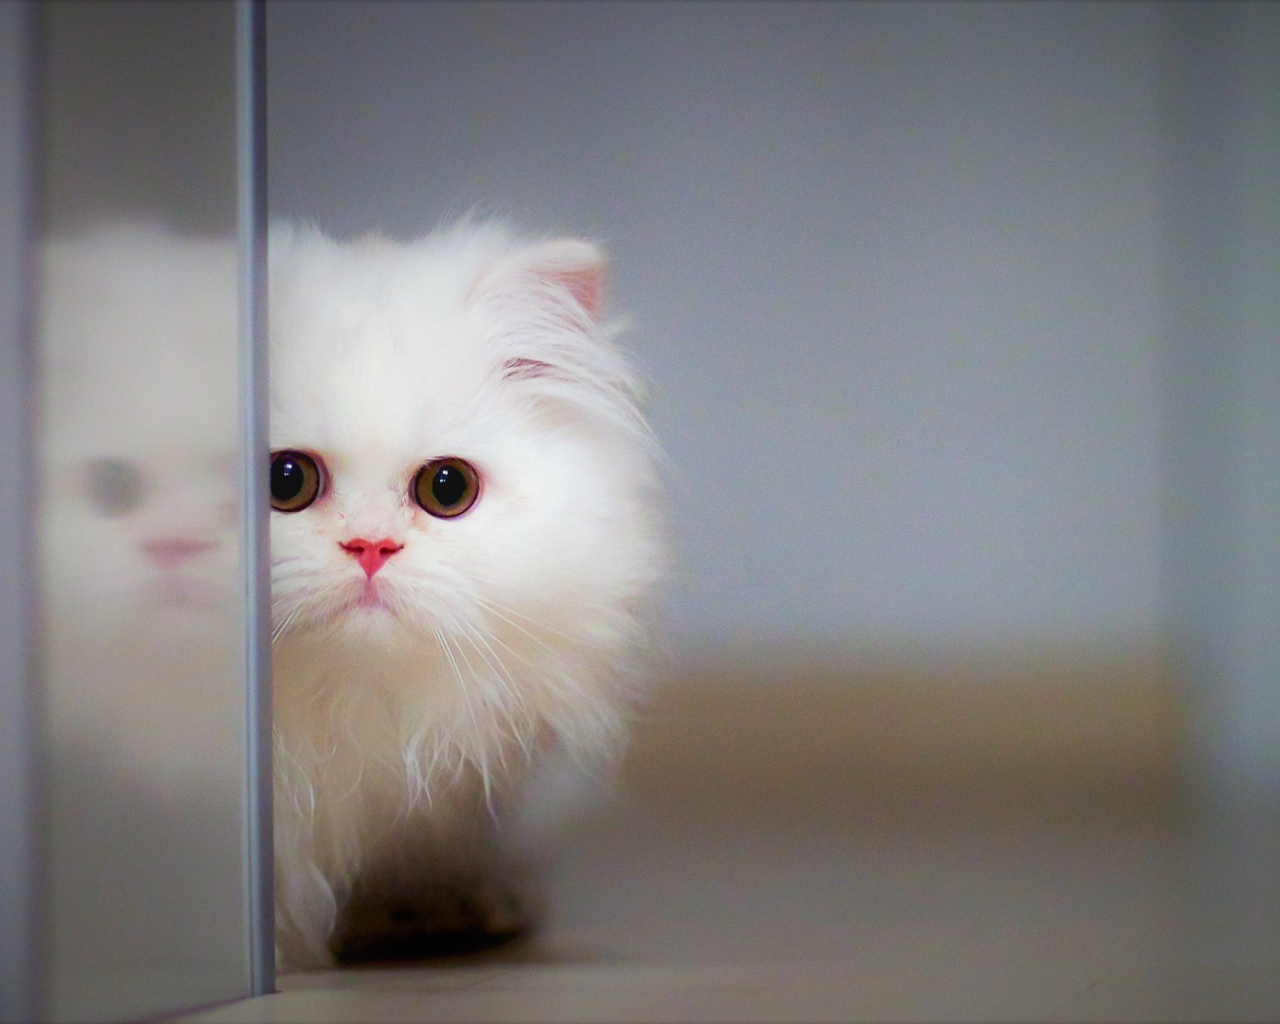 White fluffy cat peeps around the corner.